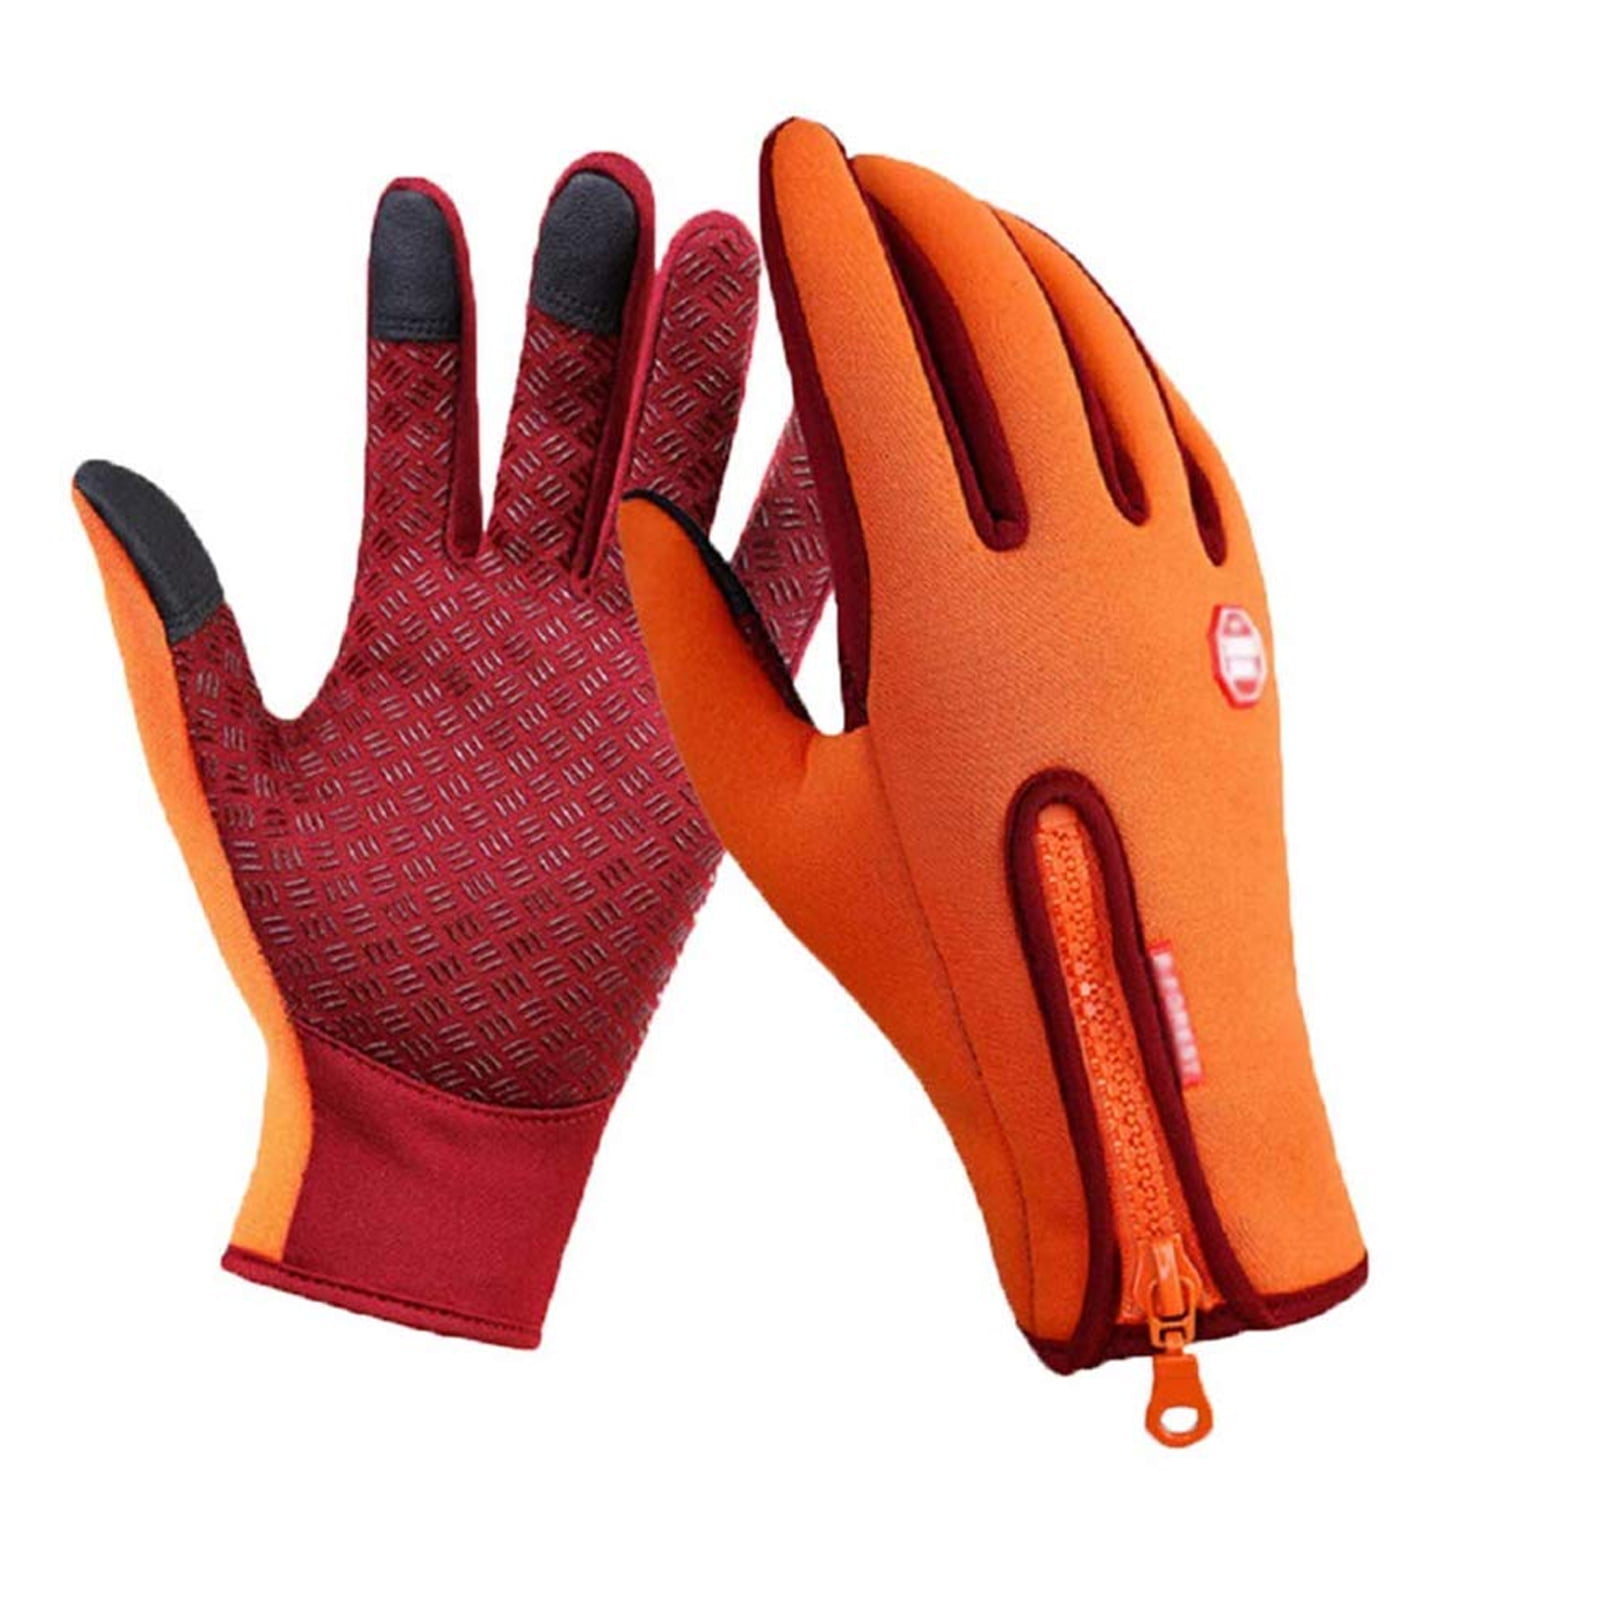 Winter Men Women Touch Screen Windproof Waterproof Outdoor Sport Driving Gloves 